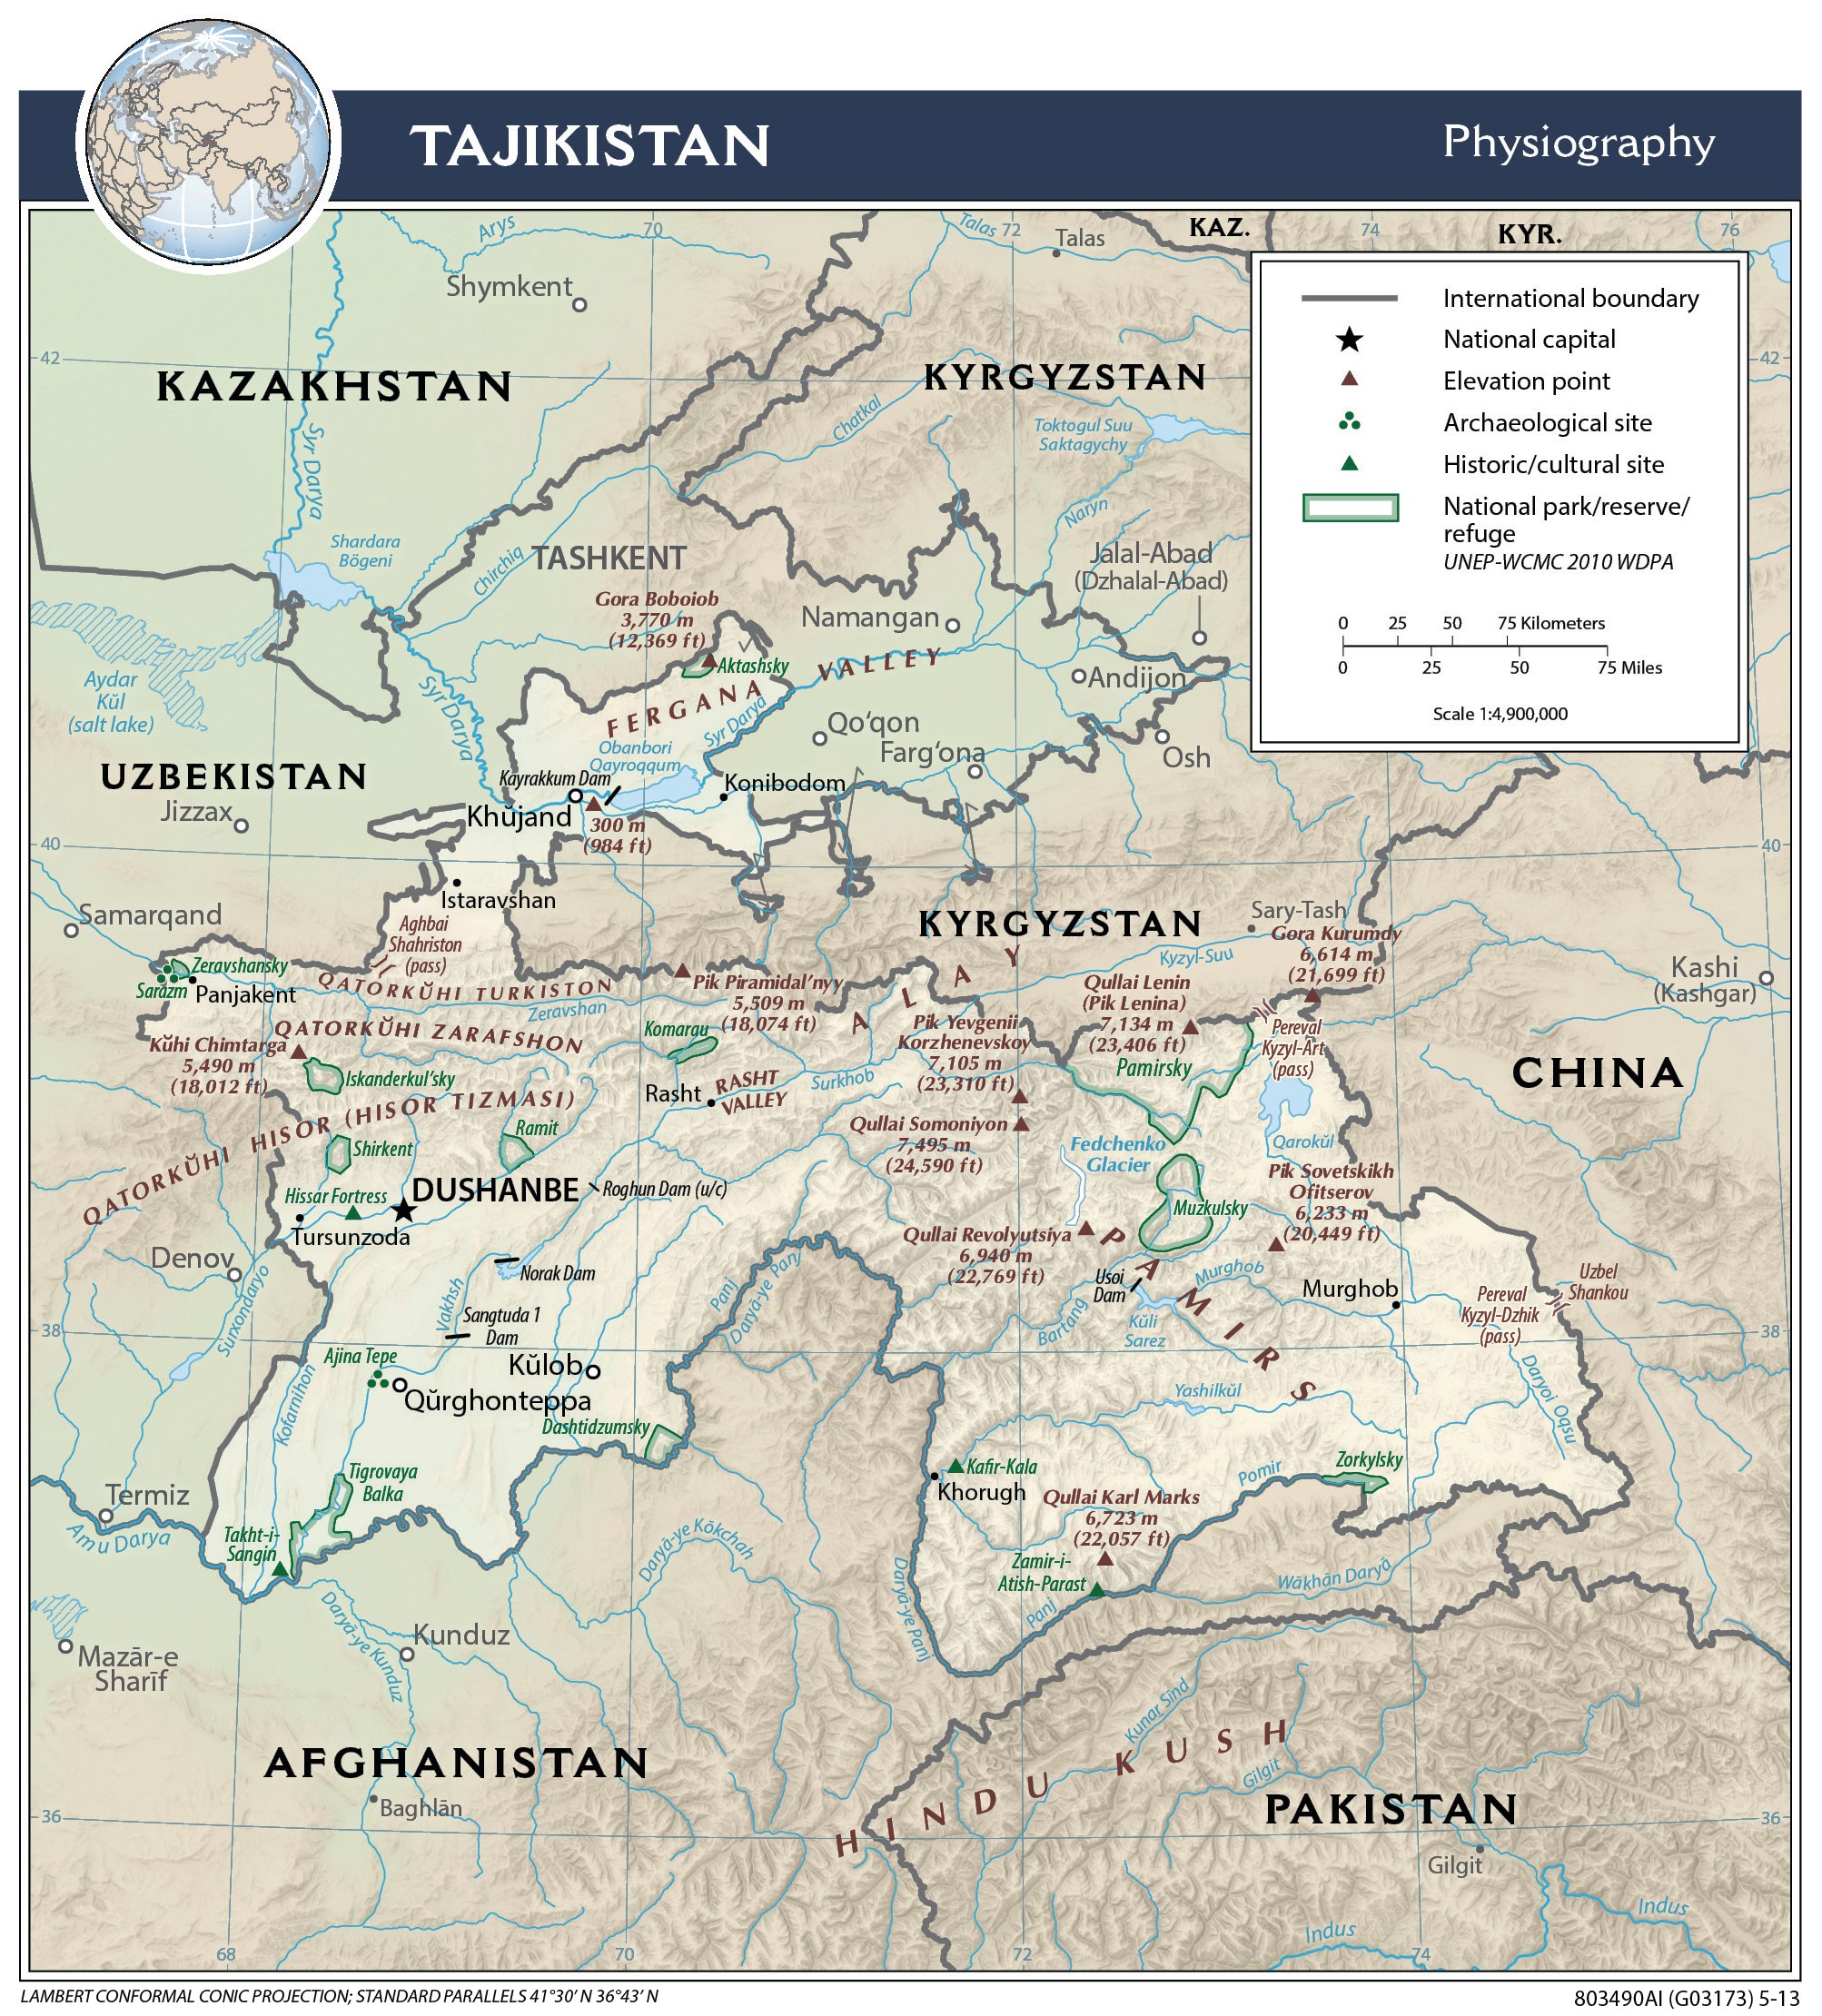 Tajikistan Physiography 